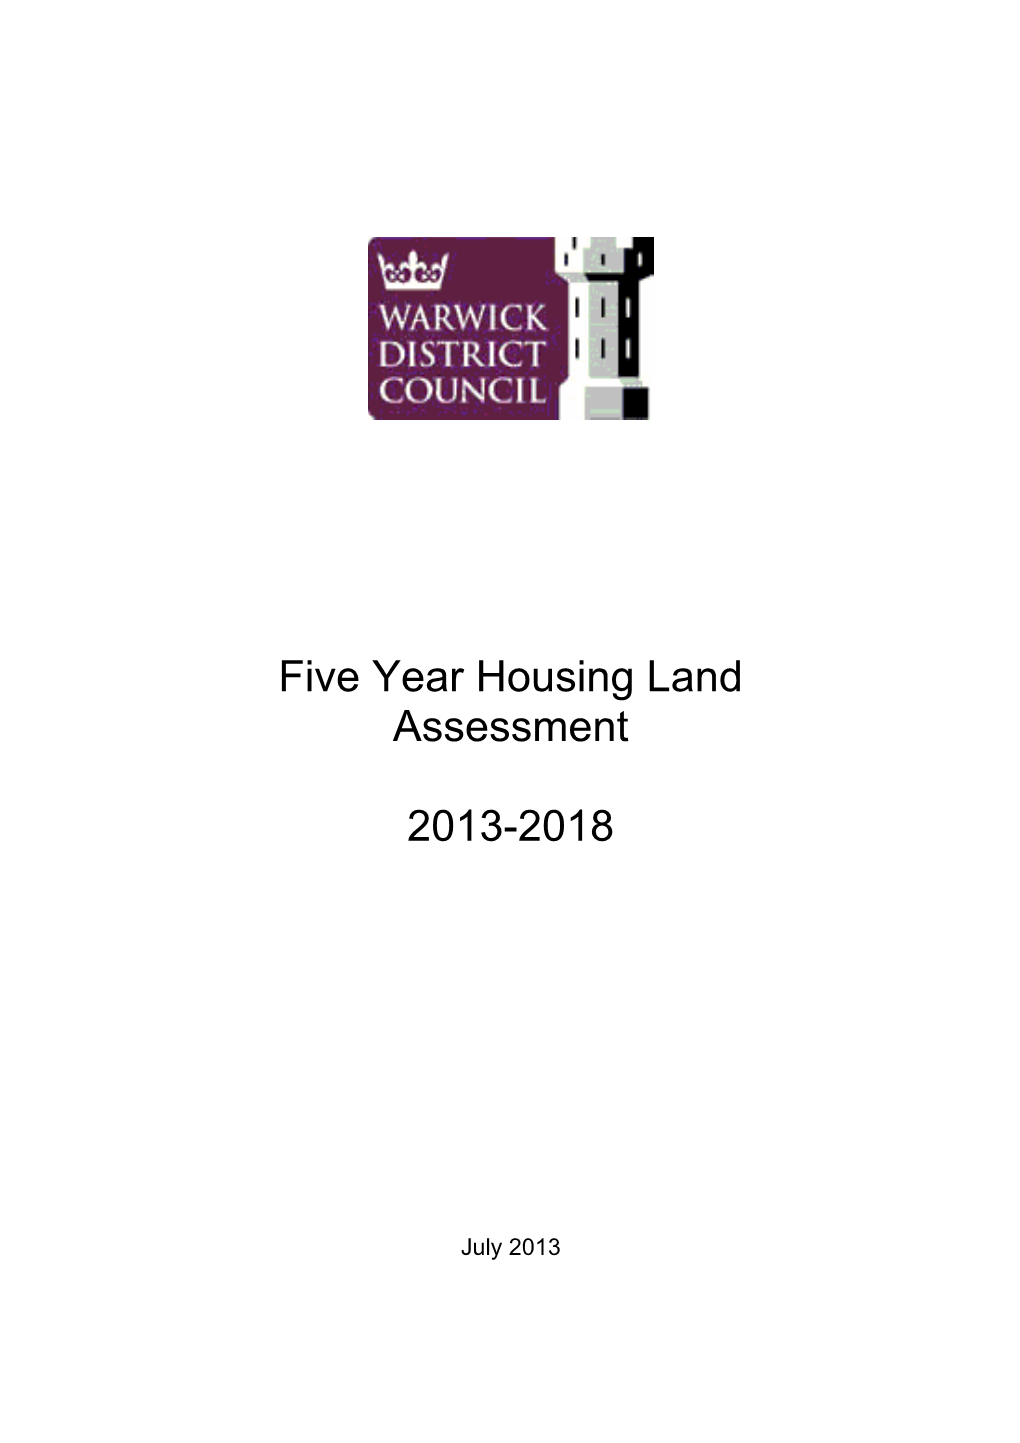 Five Year Housing Land Assessment 2013-2018